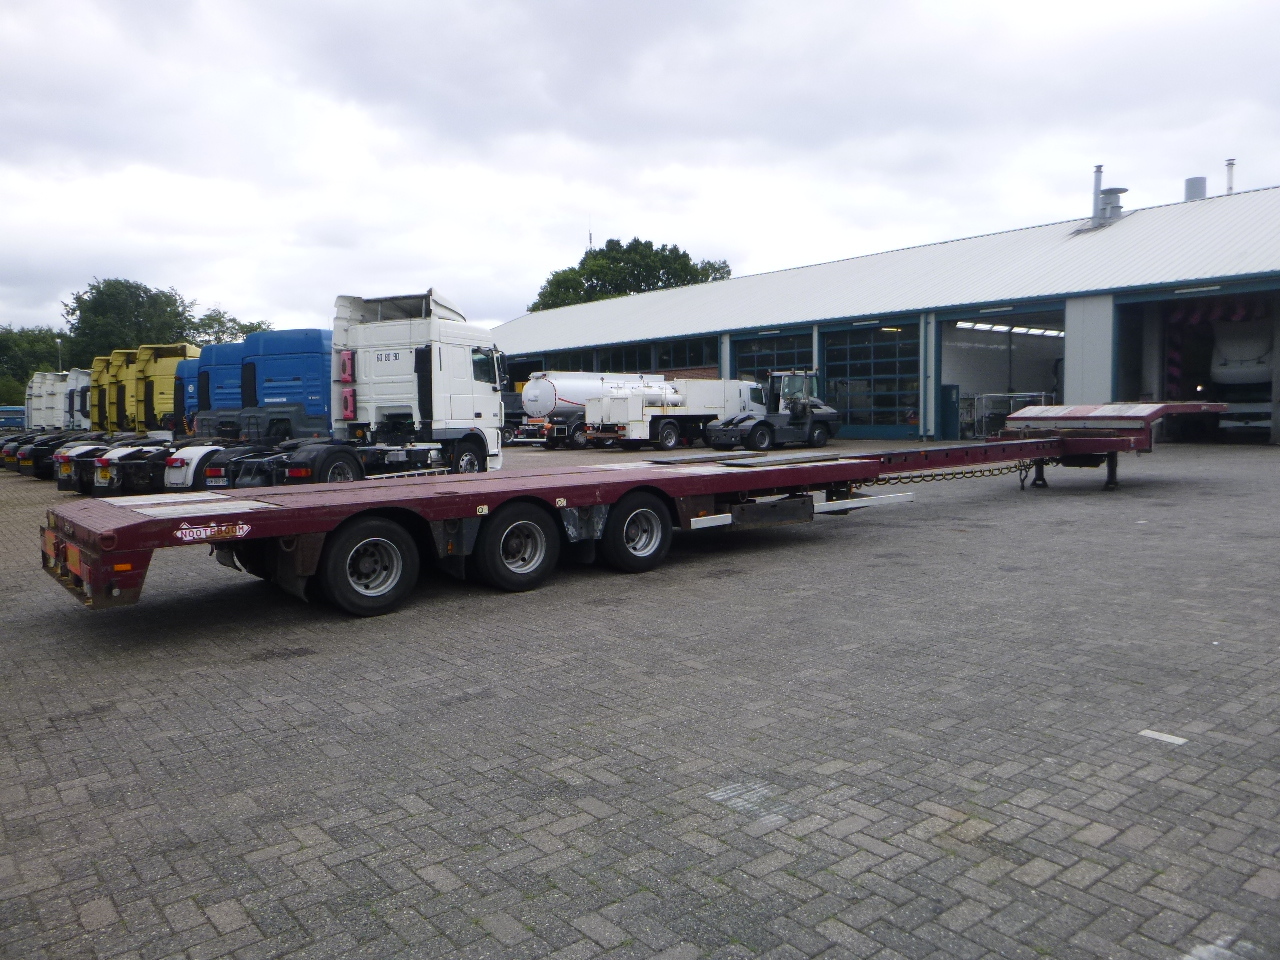 Низкорамный полуприцеп Nooteboom 3-axle semi-lowbed trailer extendable 14.5 m + ramps: фото 4